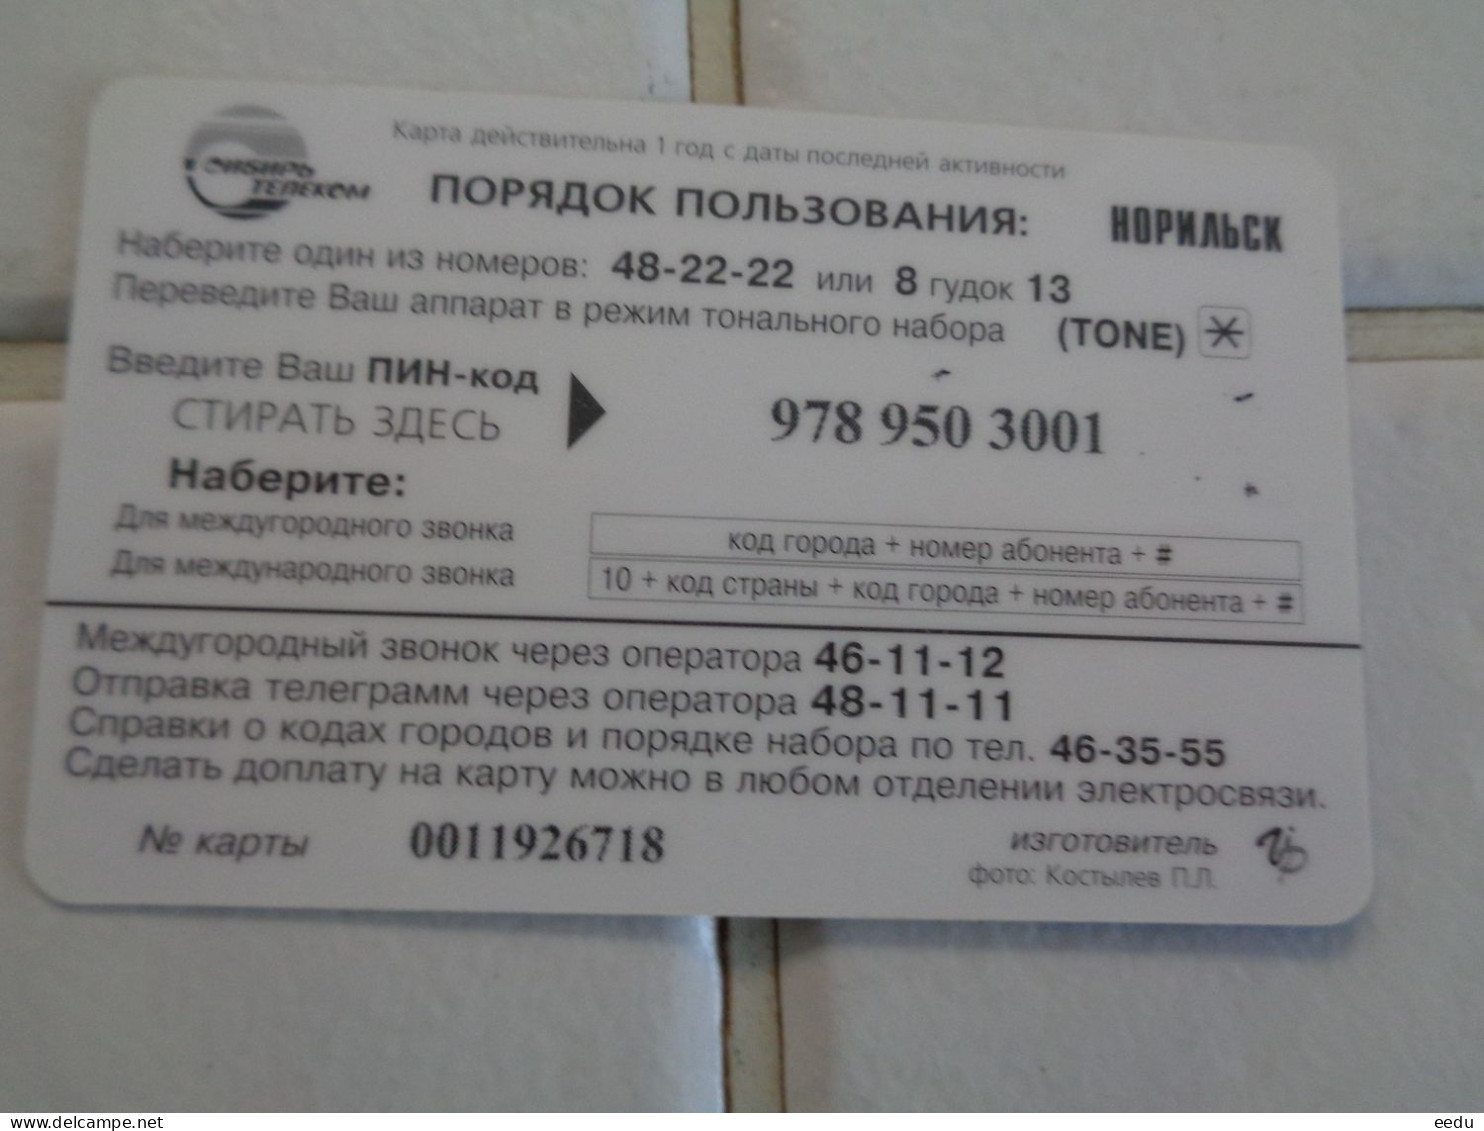 Russia Phonecard - Rusland